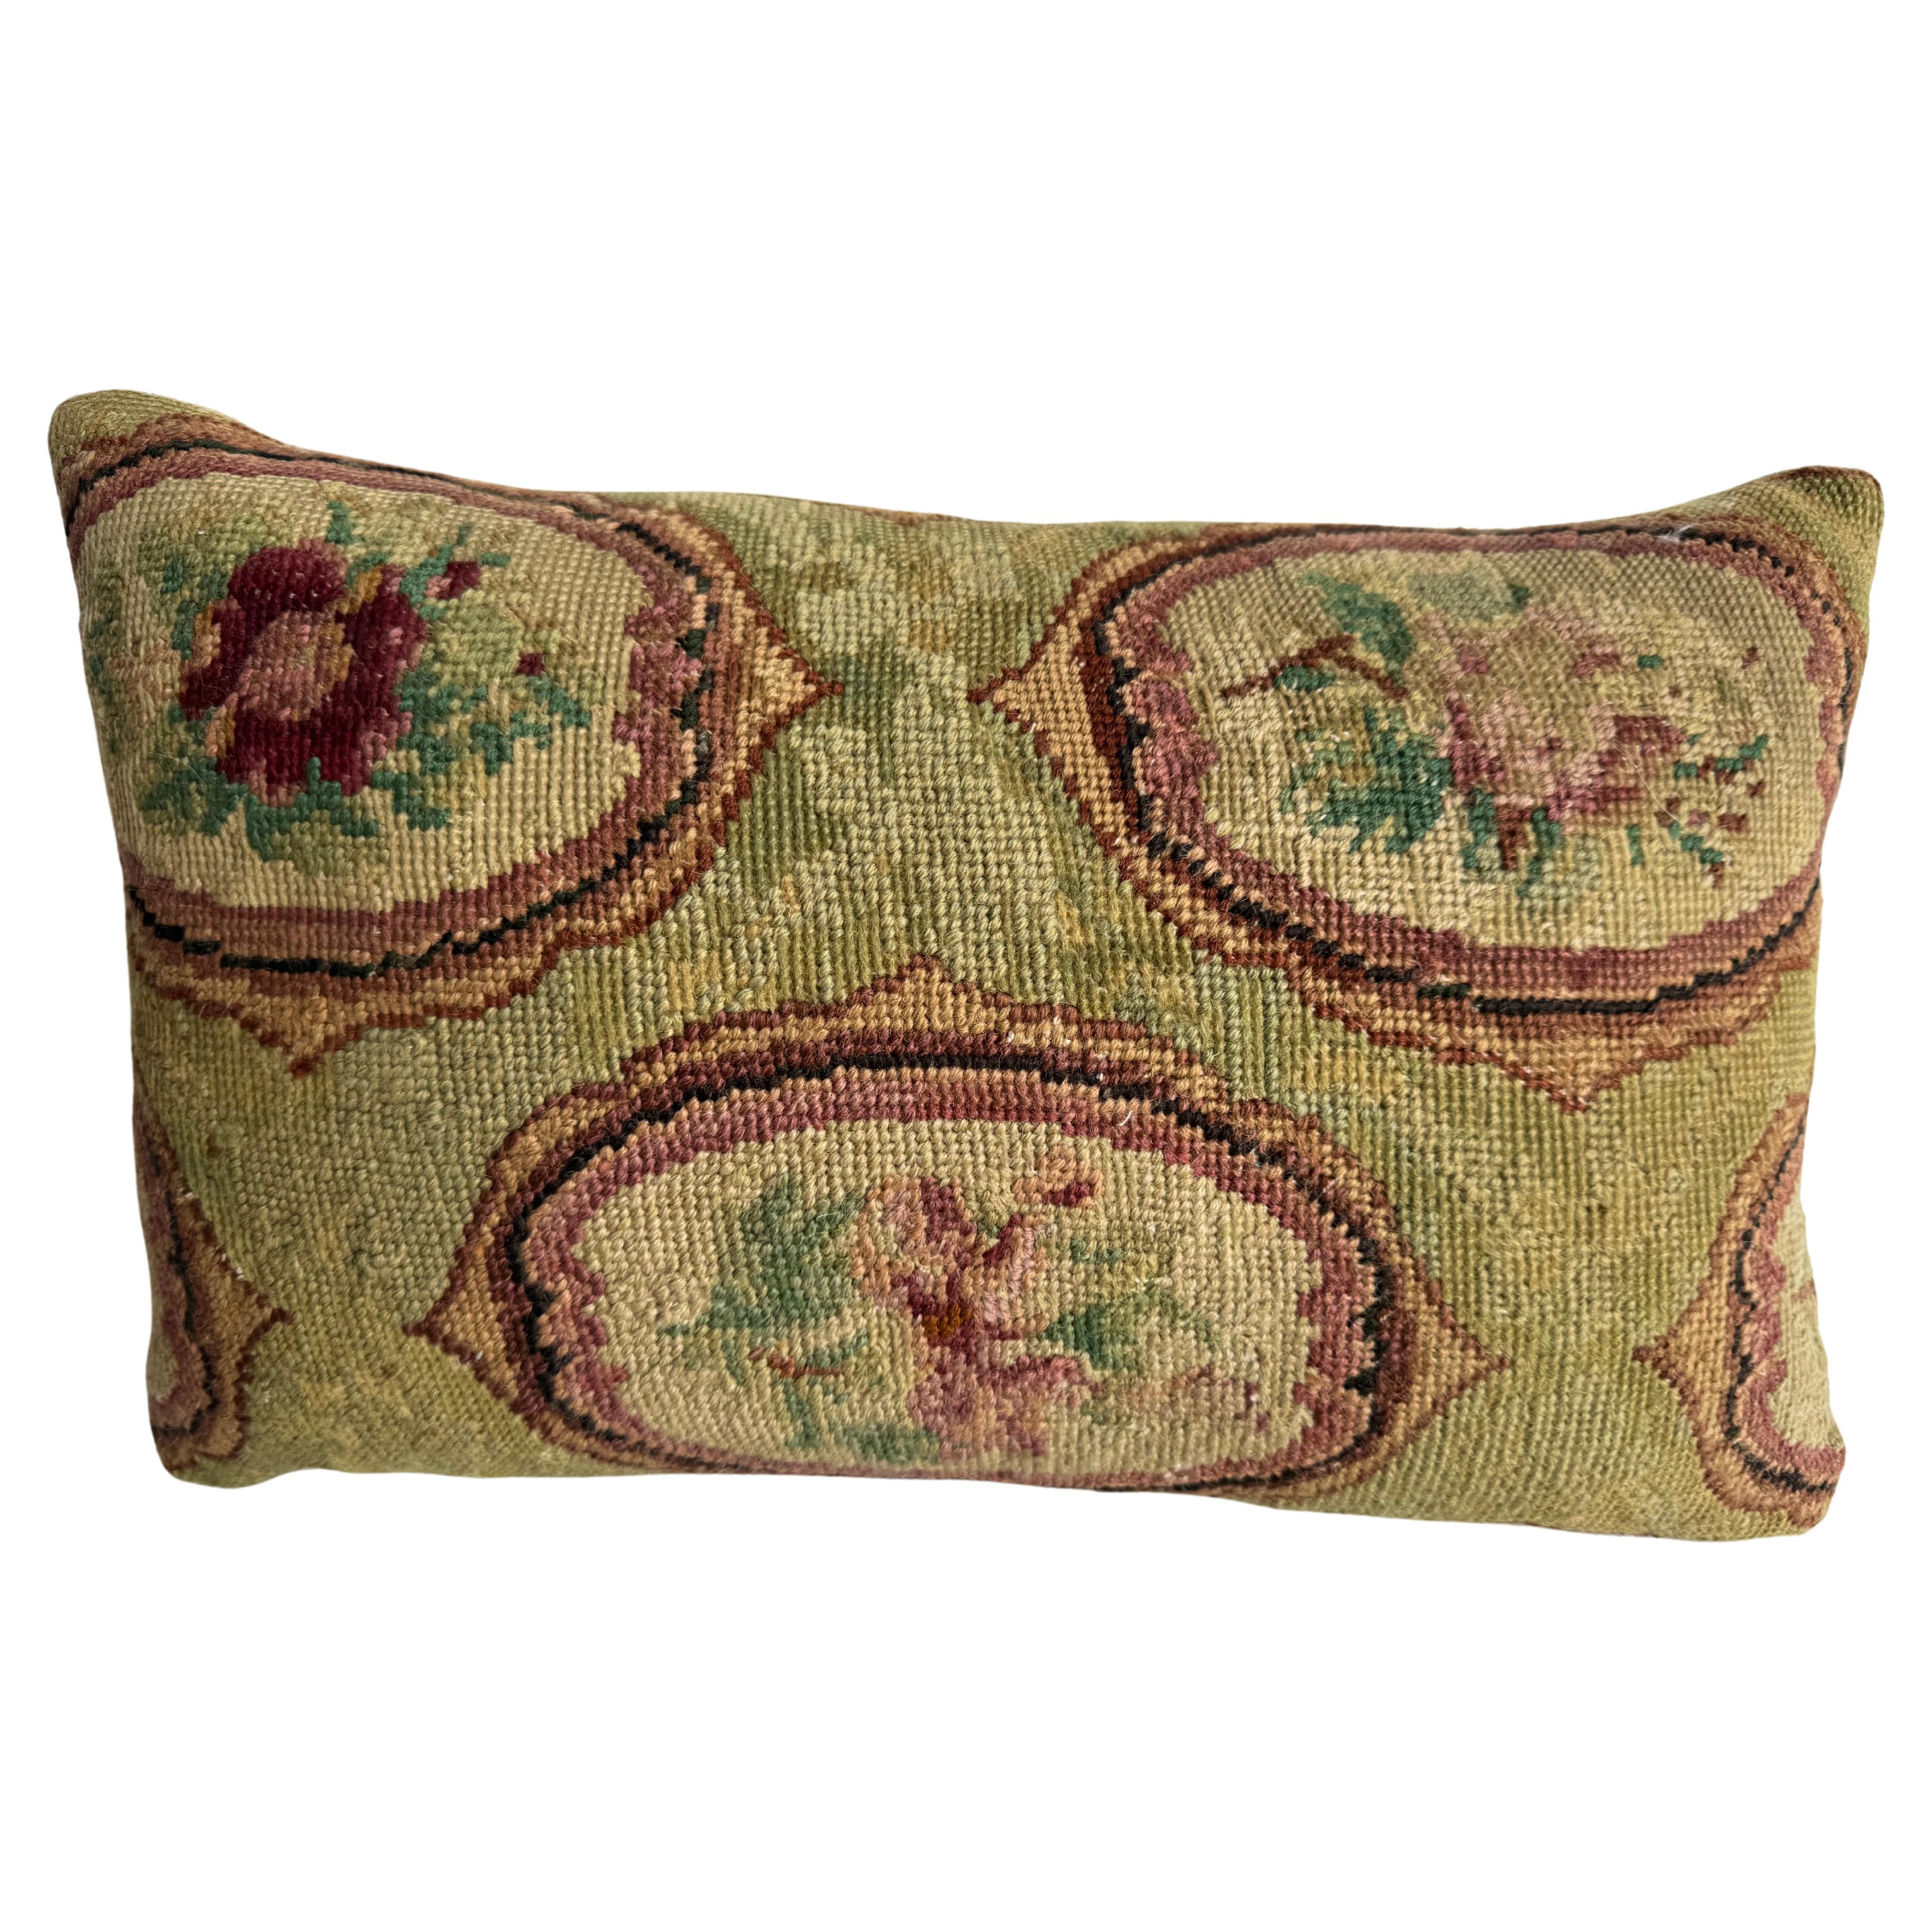 1856 English Needlework 16" x 11" Pillow For Sale